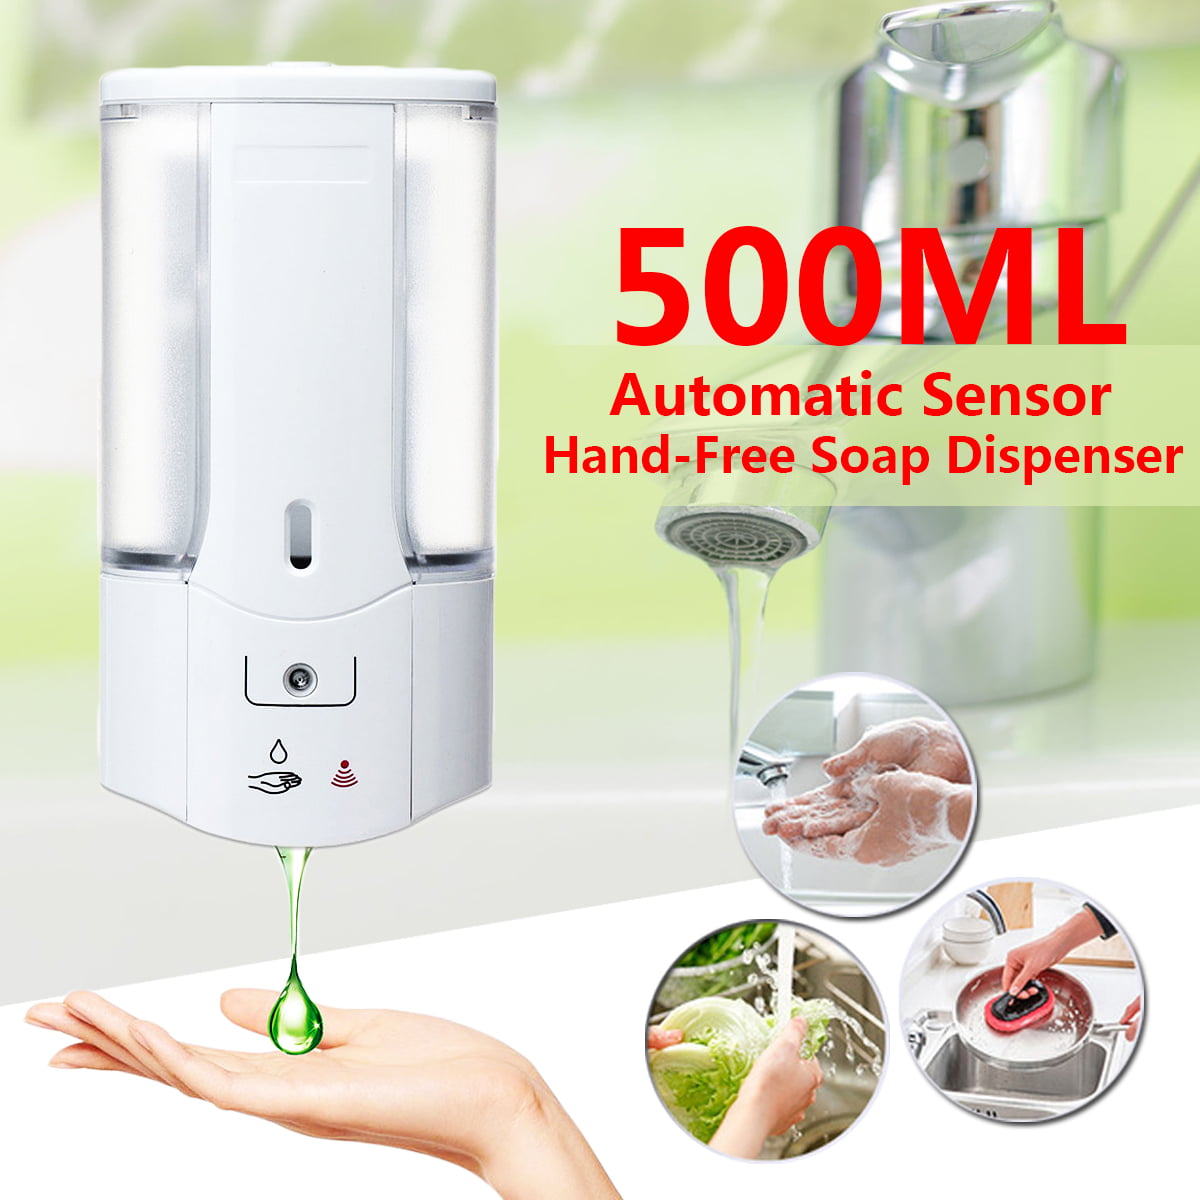 500mL Wall Mounted Automatic Soap Dispenser, HandFree Infrared Motion Sensor Shampoo Foam